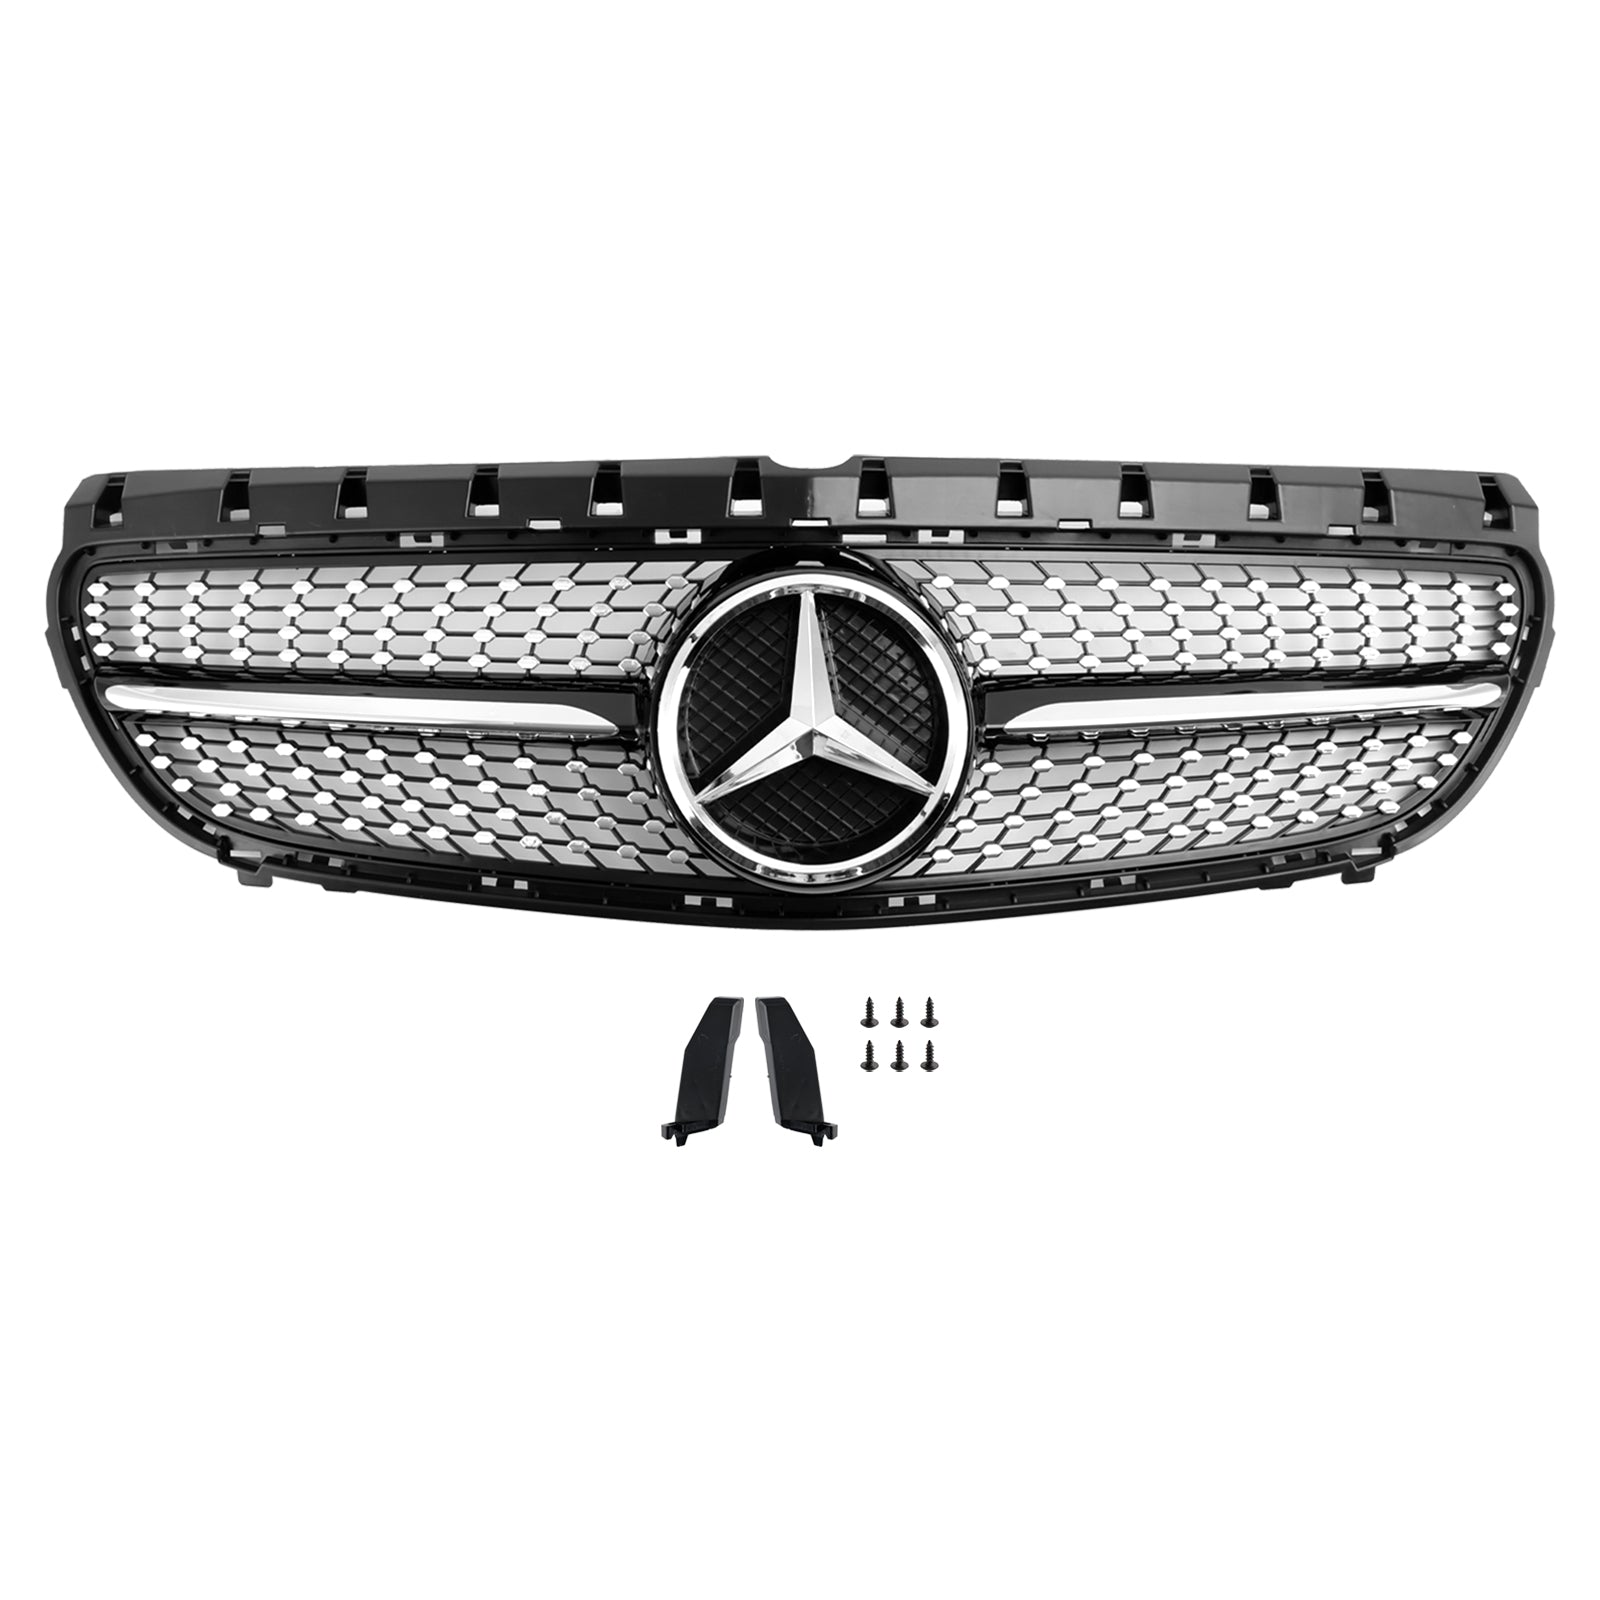 Grille de calandre de pare-chocs avant de lifting de Mercedes Benz Classe B W246 2015-2018